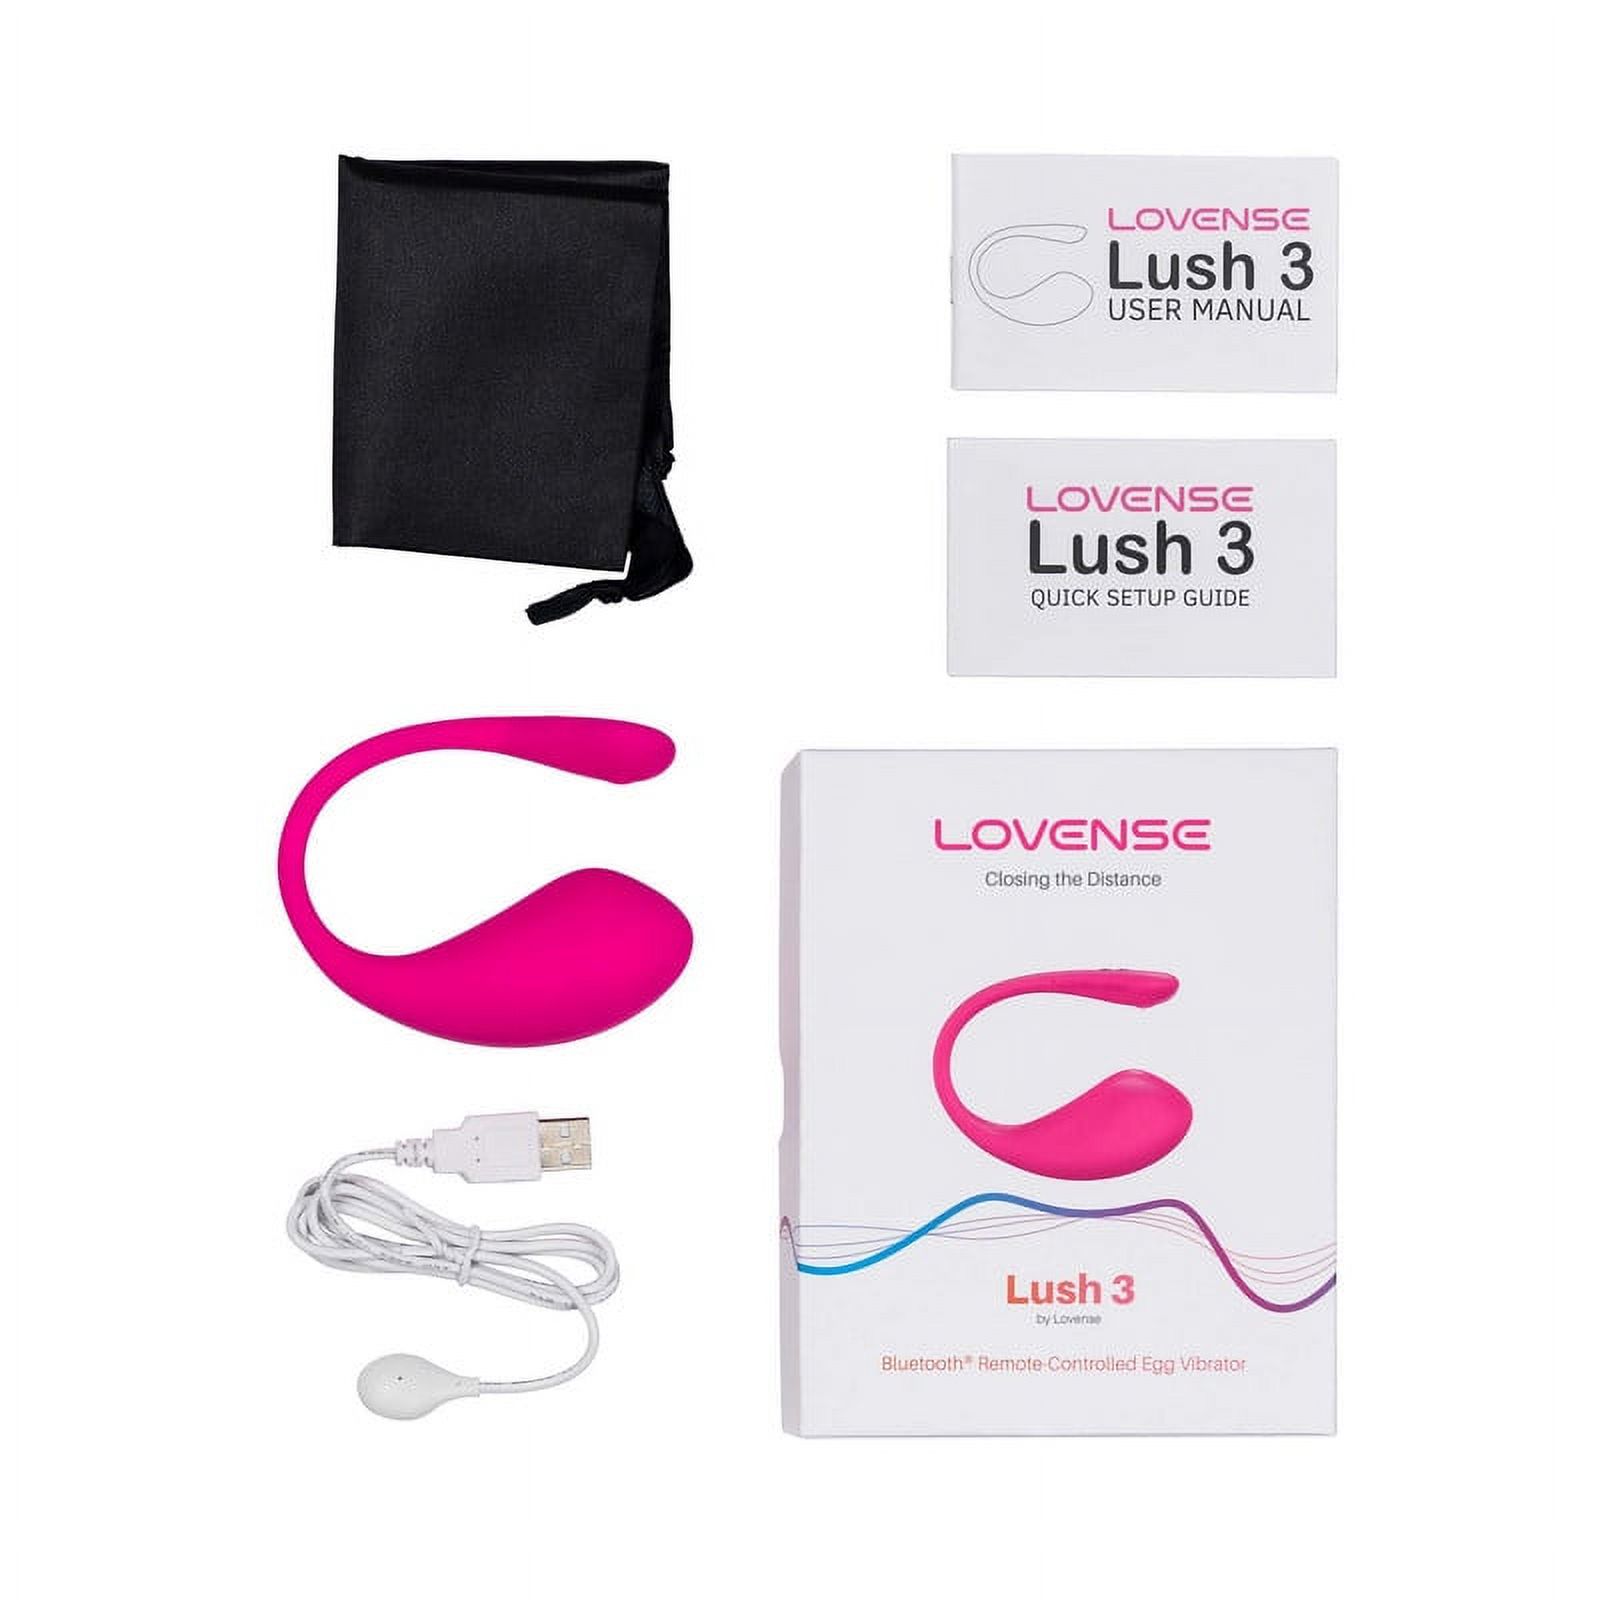 Lovense Lush 3 Camming Vibrator, Mini Wearable Bullet Vibrator for Women - Pink - image 3 of 6